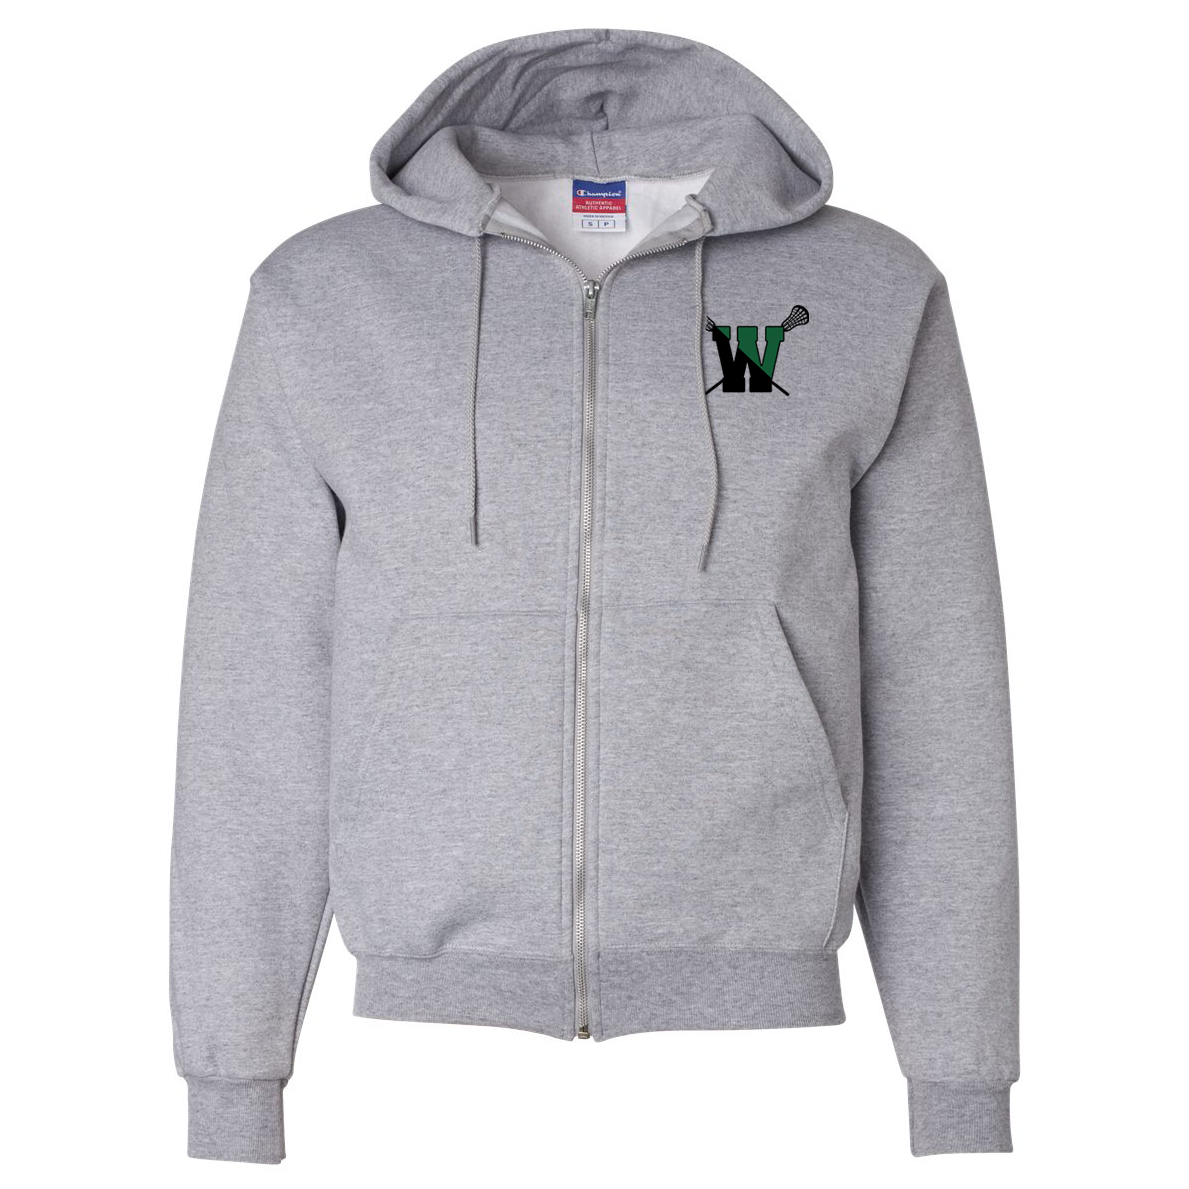 Westwood Girls Lax Champion Full Zip Sweatshirt